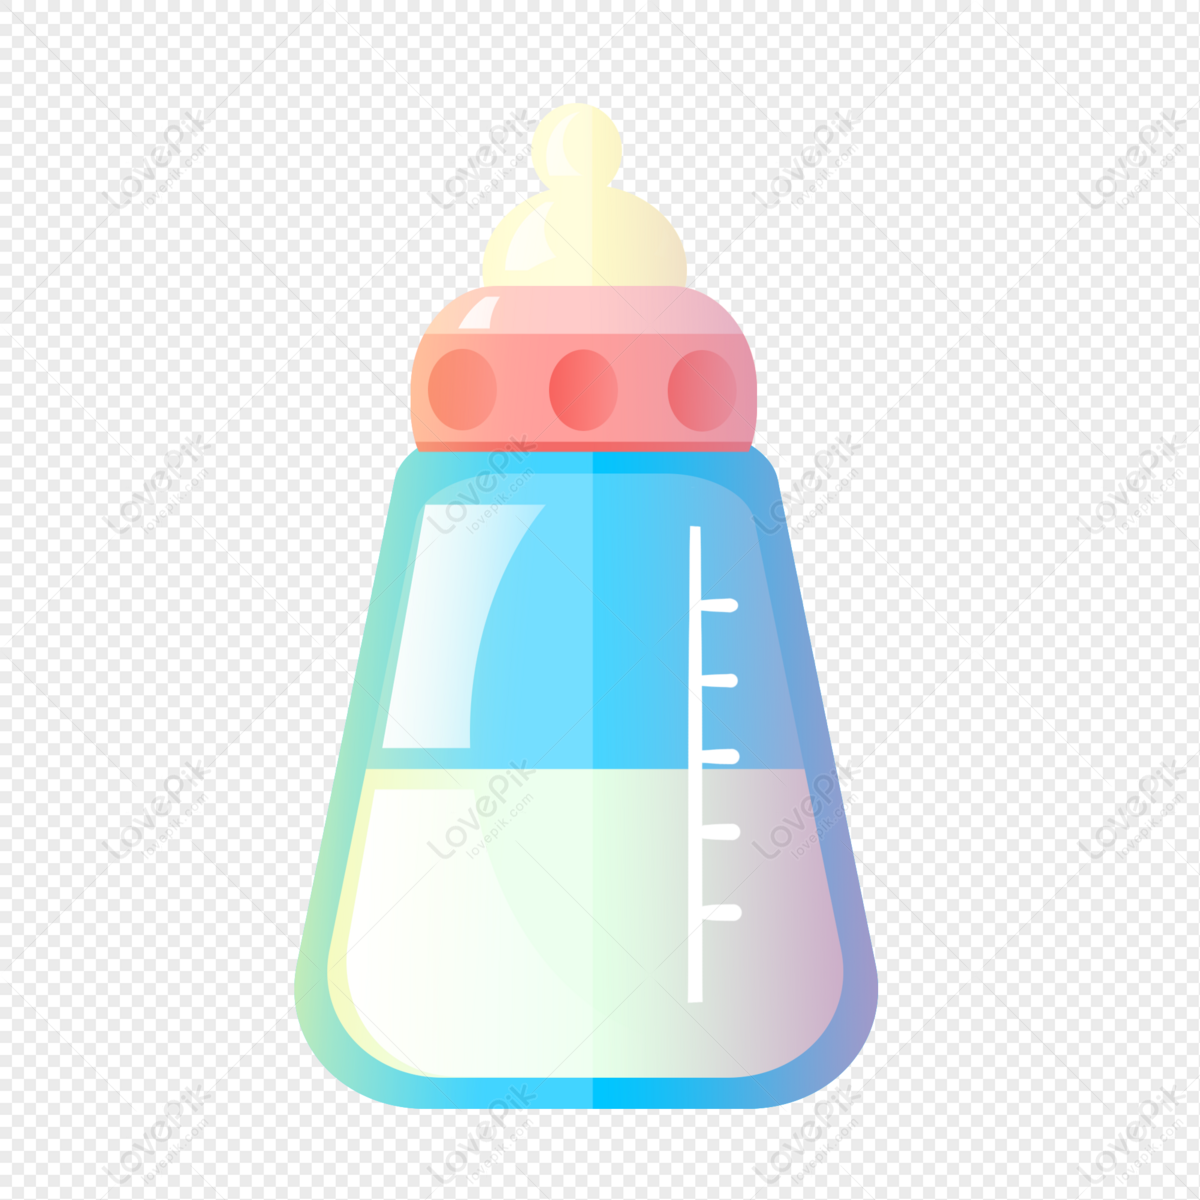 Milk Bottle PNG Transparent Image And Clipart Image For Free Download -  Lovepik | 401528947